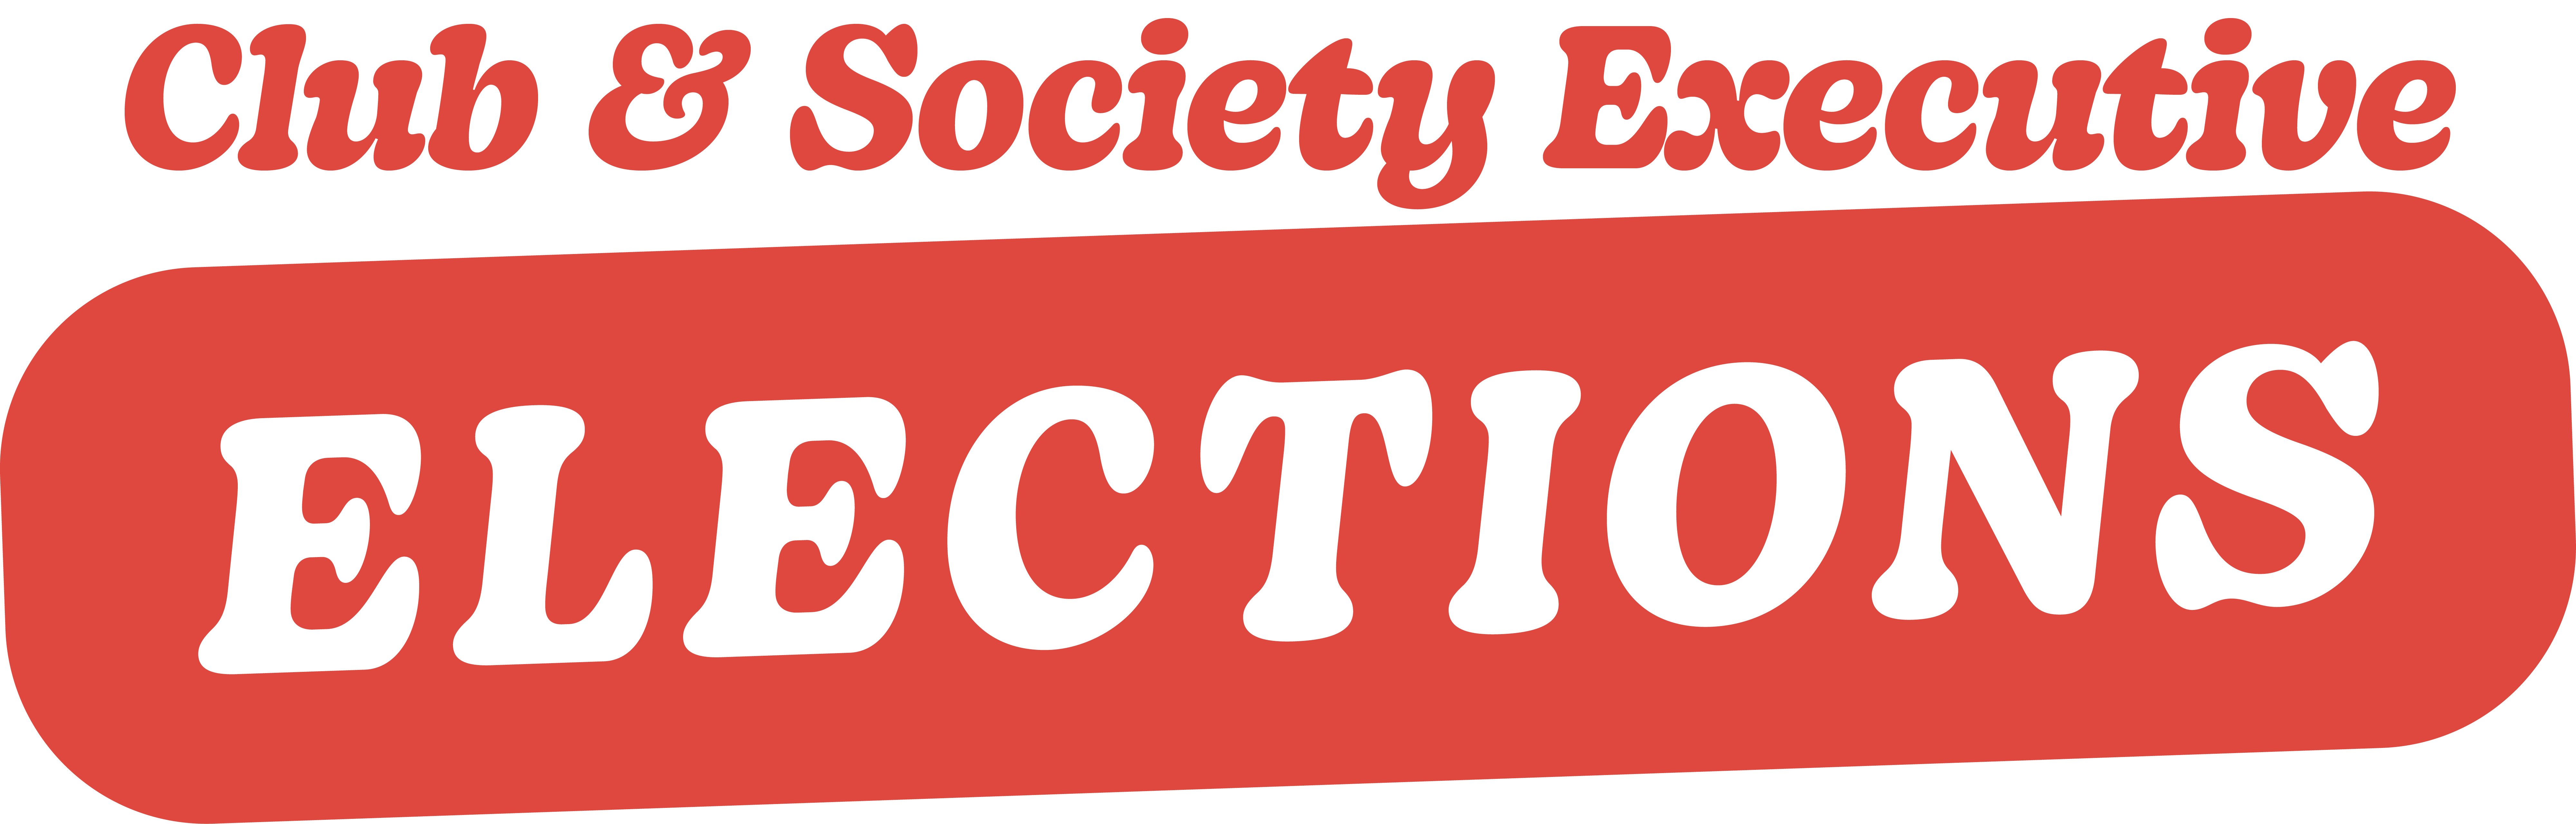 Exec Rep Elections logo